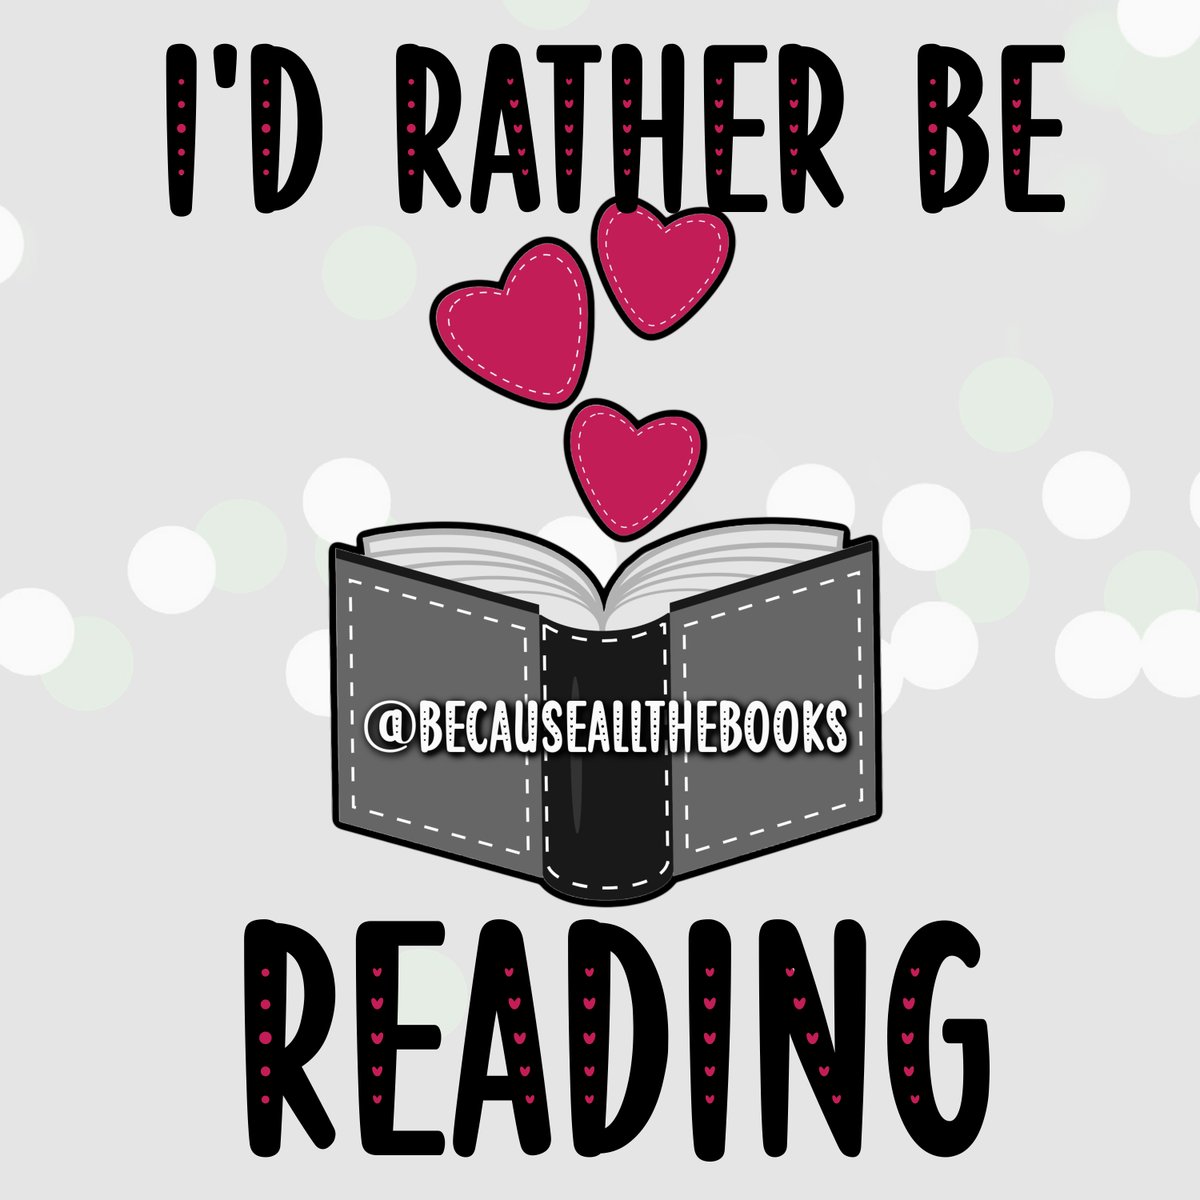 Spot on!!!

#BecauseAllTheBooks #LetMeRead #NeedToRead #NeedToReadIt #NeedToReadItNow #BookAesthetic #OneMoreChapter #ReaderProblems #ReaderStruggles #StruggleIsReal #ReadingAesthetic #IdRatherBeReading goodreads.com/user/show/1196…